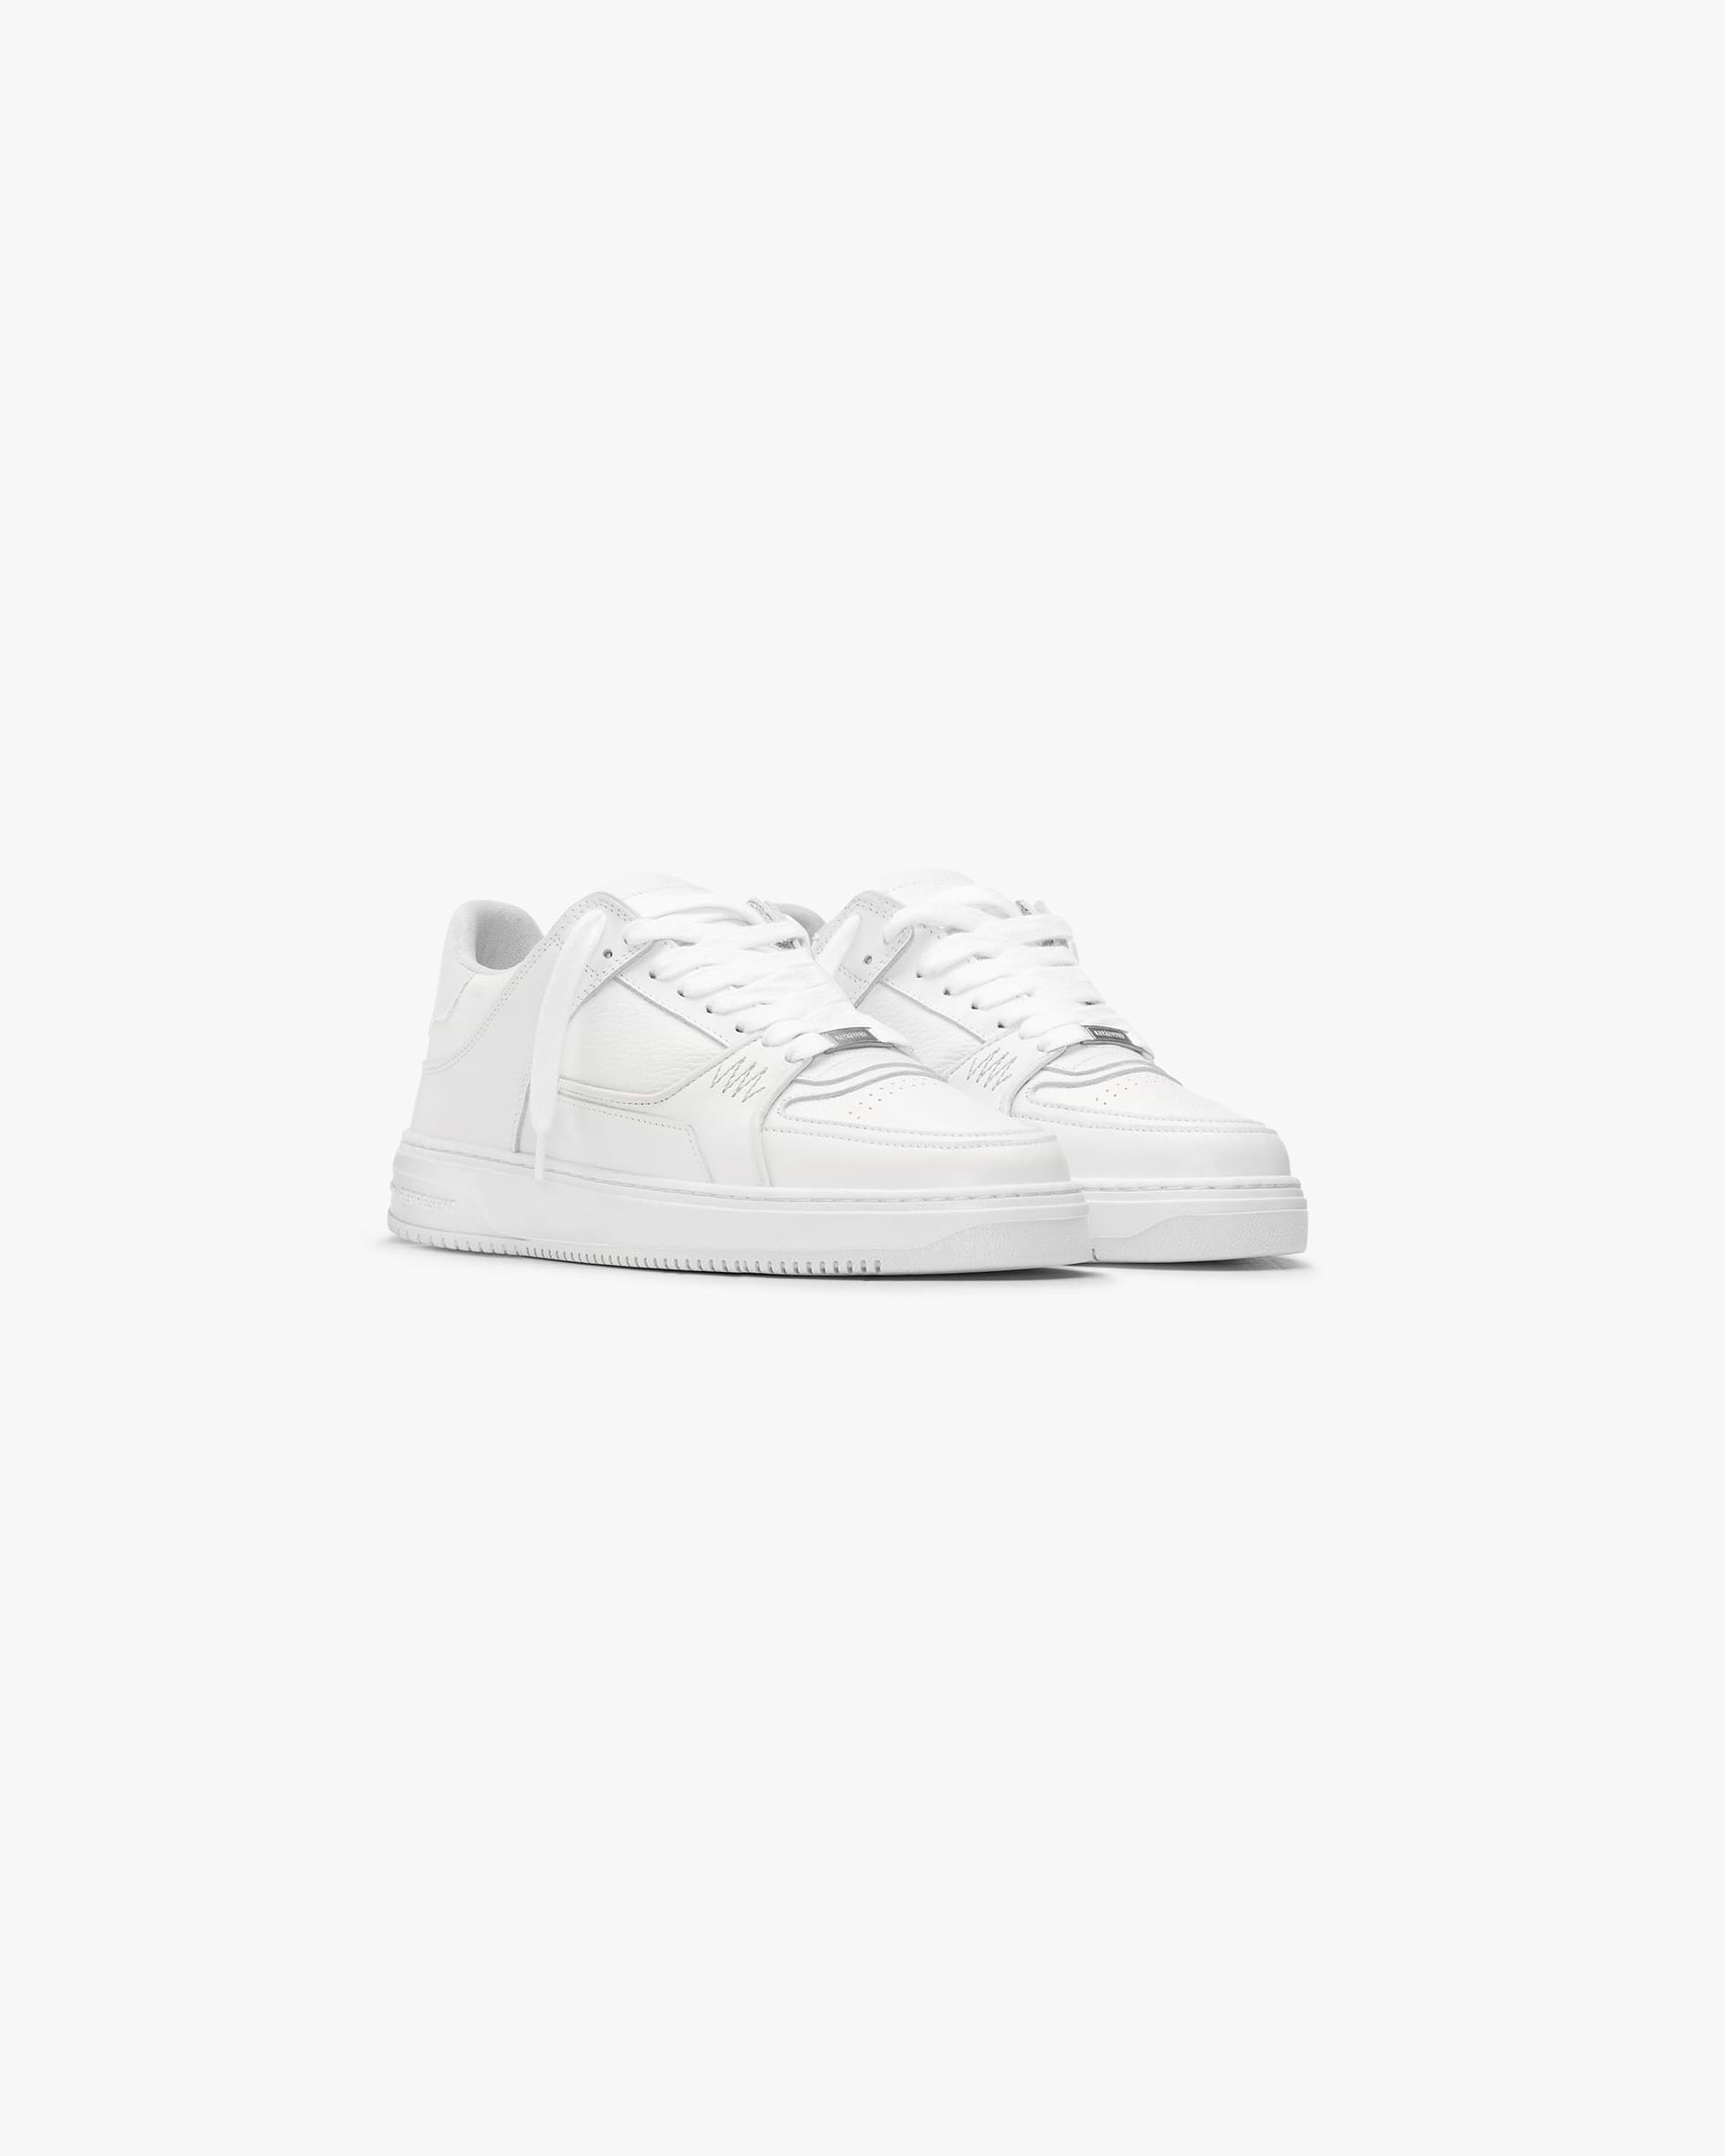 Apex | Flat White Footwear FW21 | Represent Clo